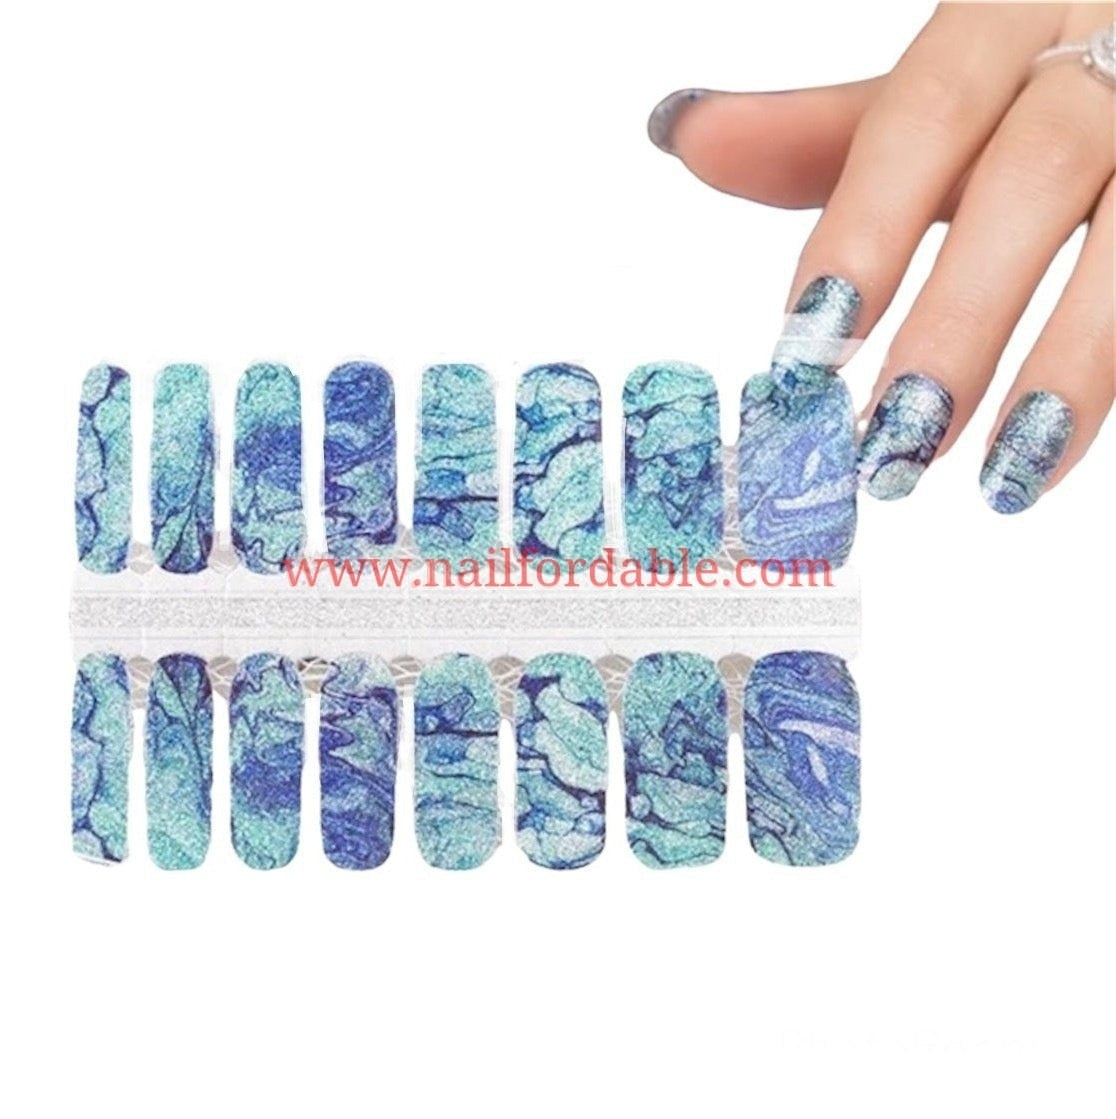 Deep ocean Nail Wraps | Semi Cured Gel Wraps | Gel Nail Wraps |Nail Polish | Nail Stickers